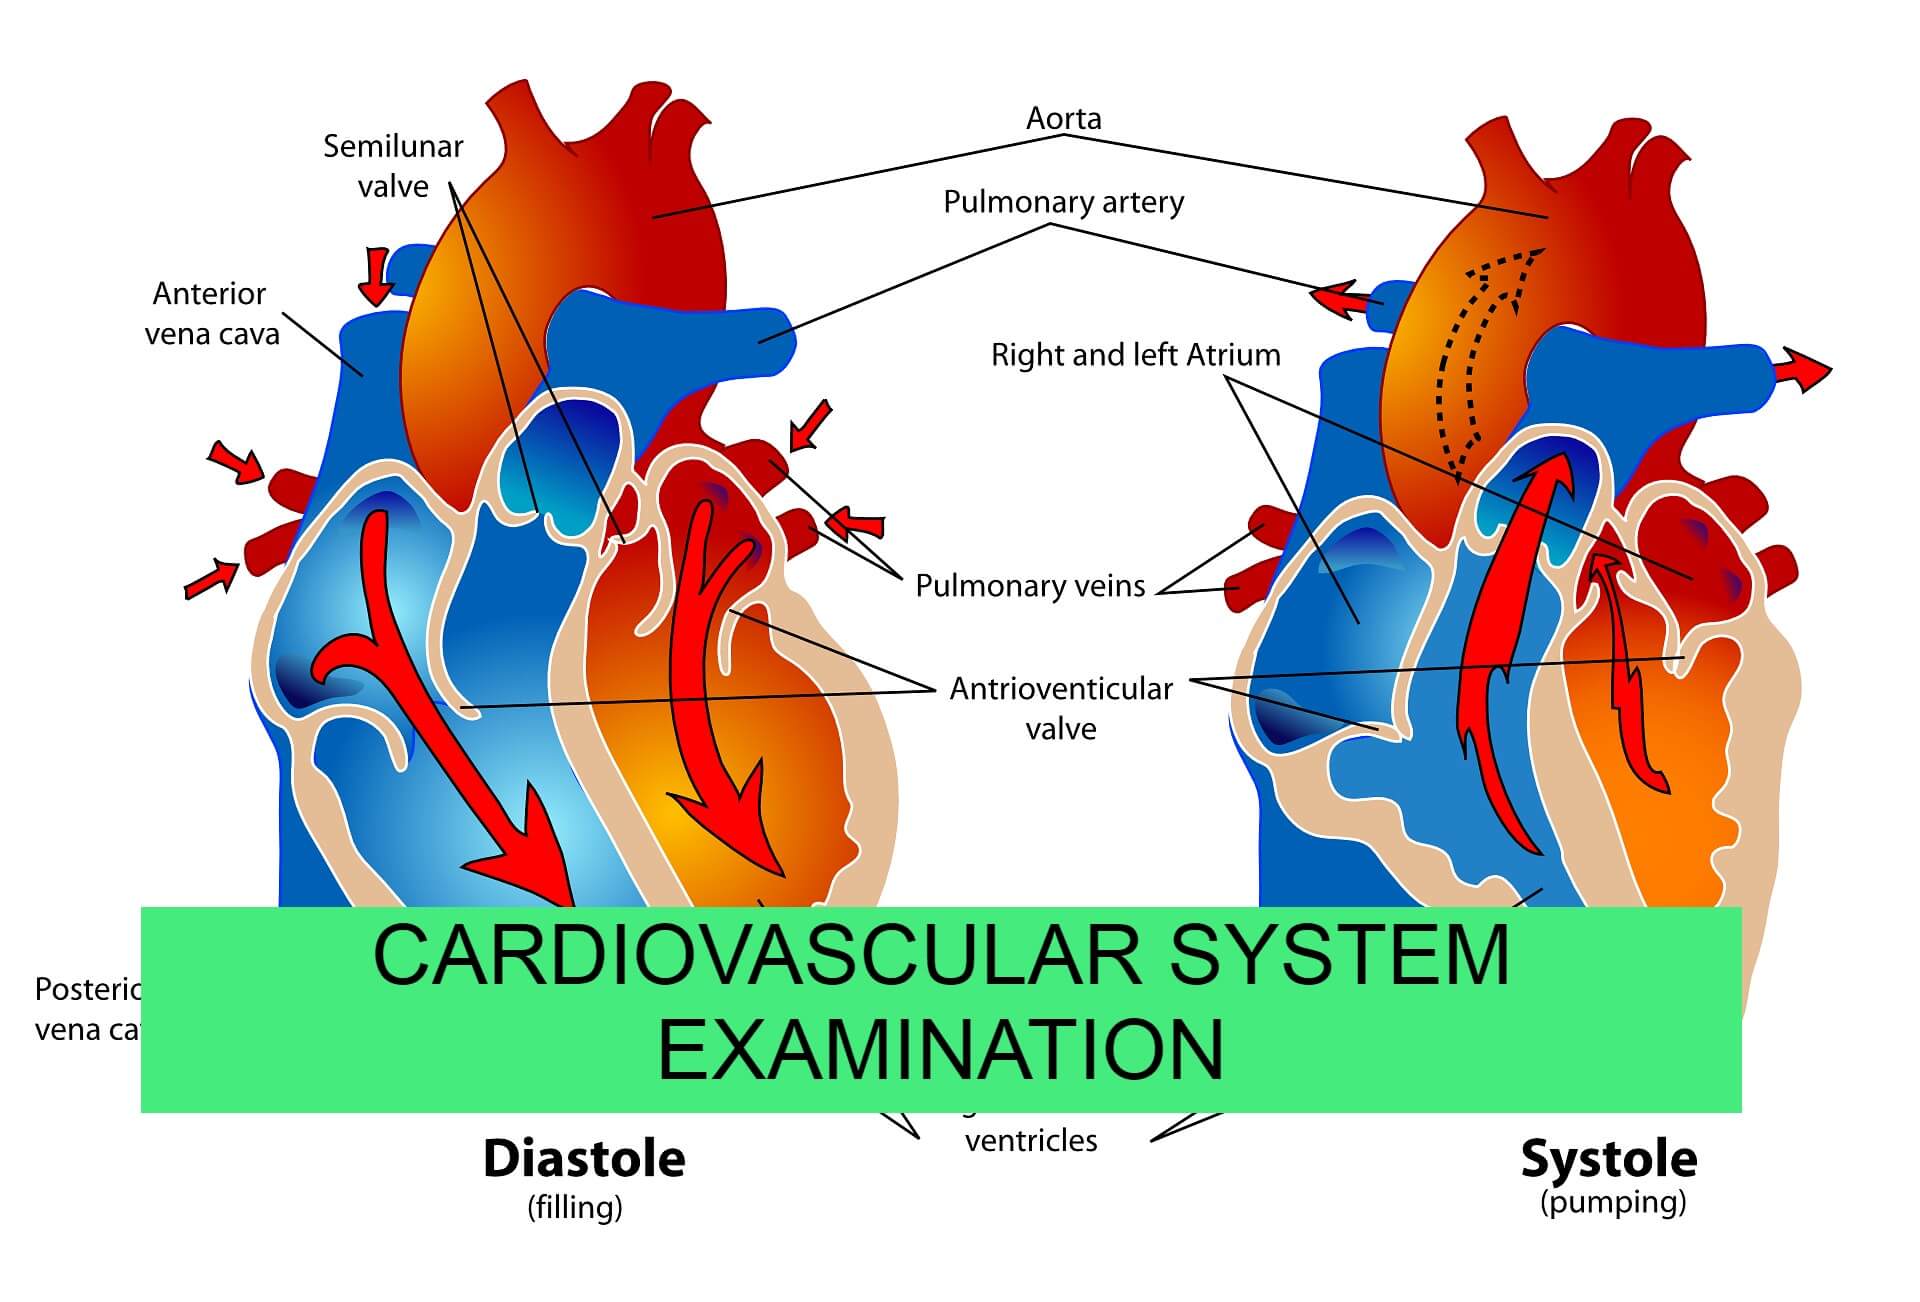 Cardiovascular system examnination